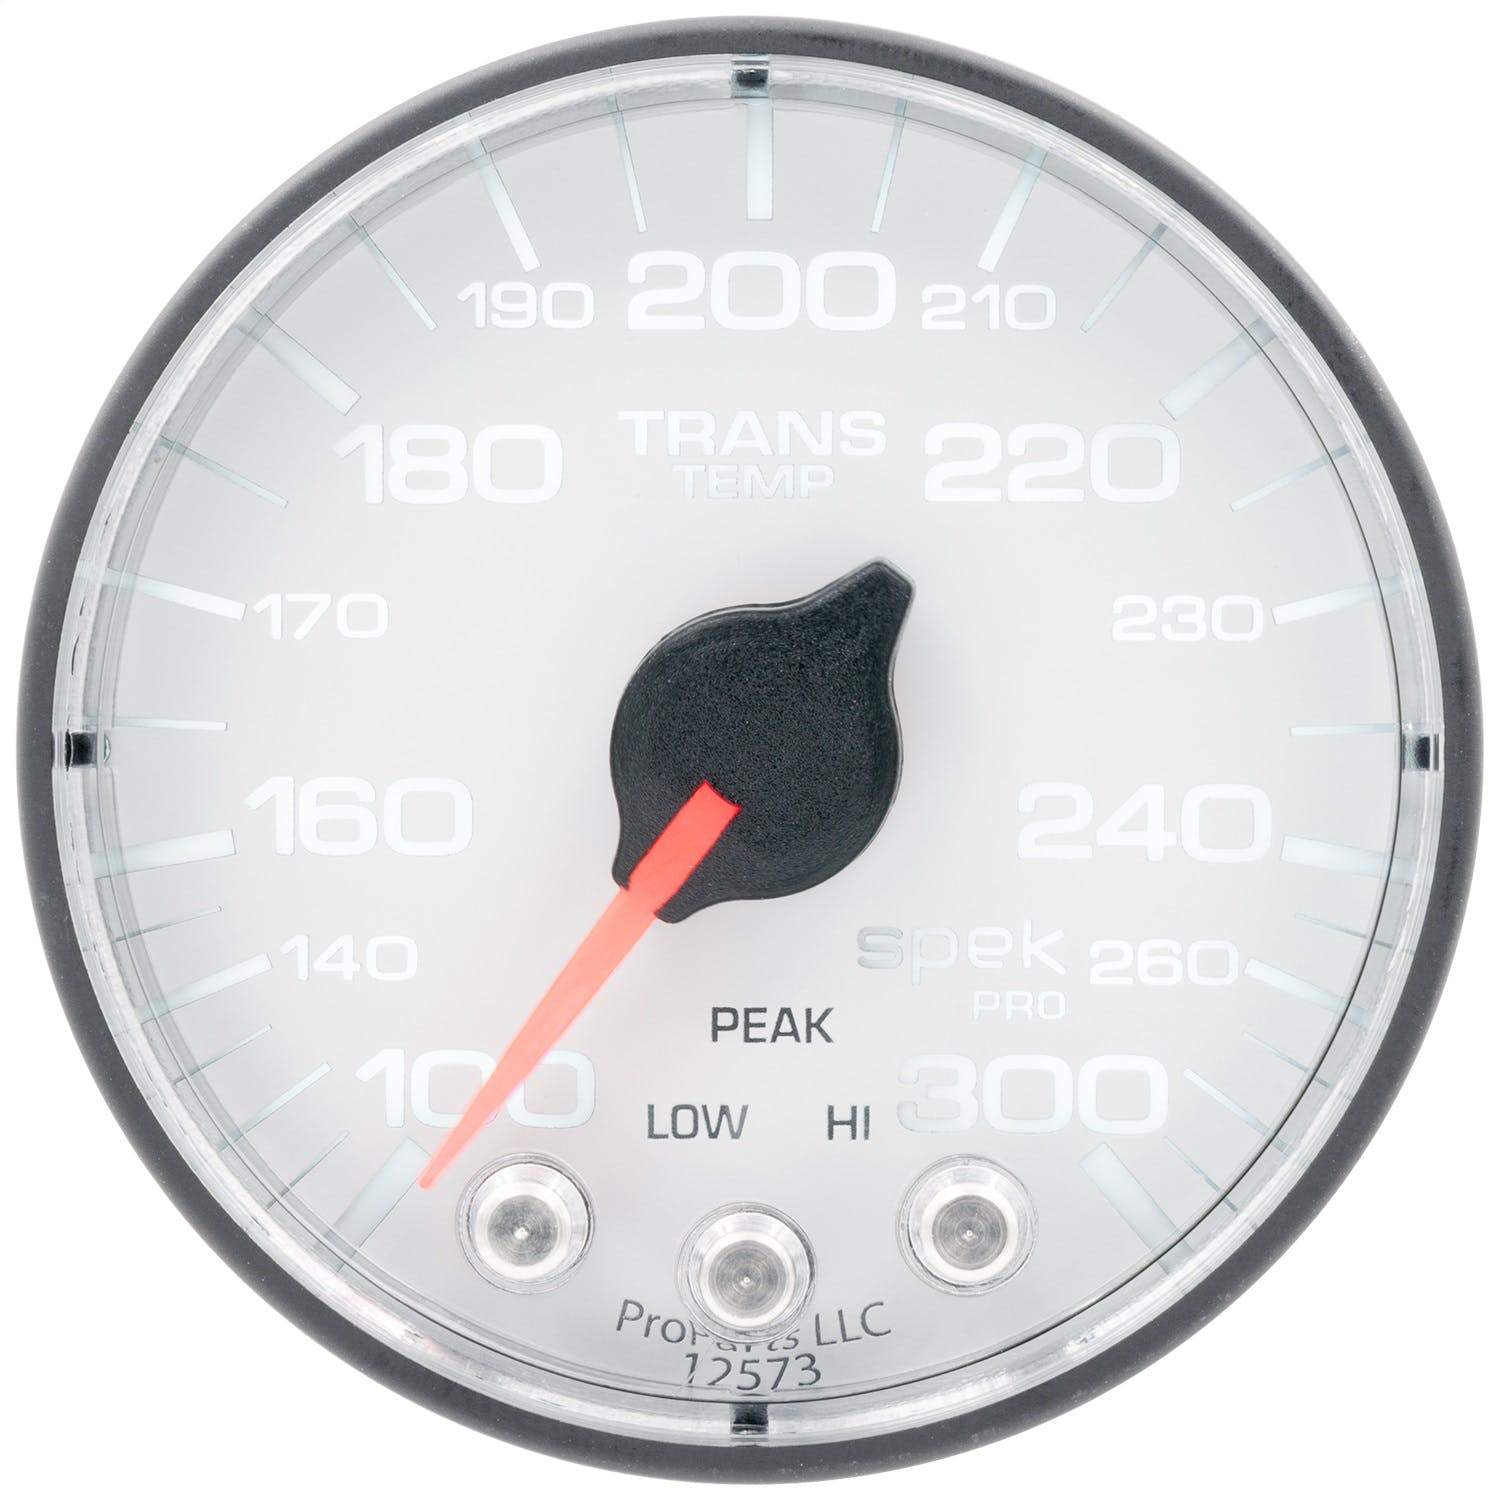 AutoMeter Products P342128 Spek-Pro Electric Transmission Temperature Gauge